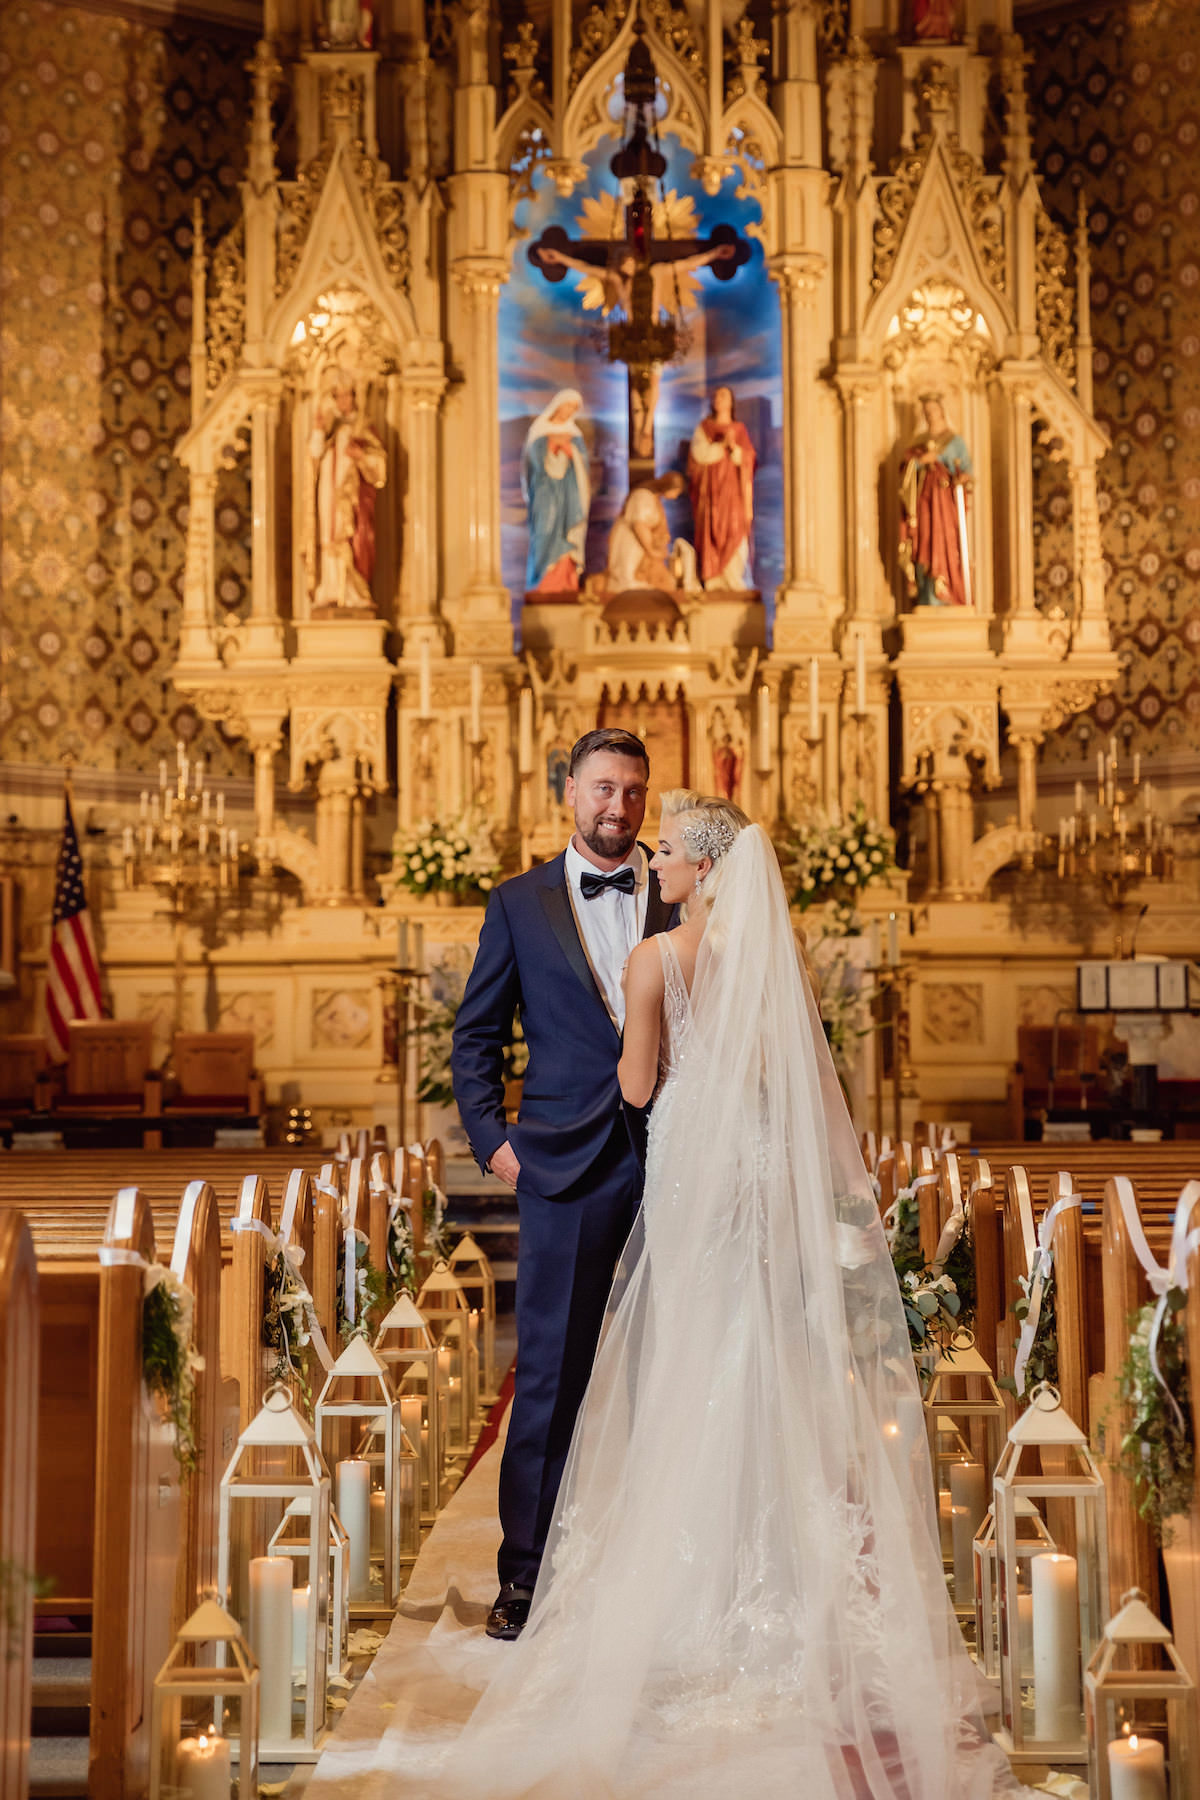 Elegant Church wedding ceremony - Photography: Charming Images